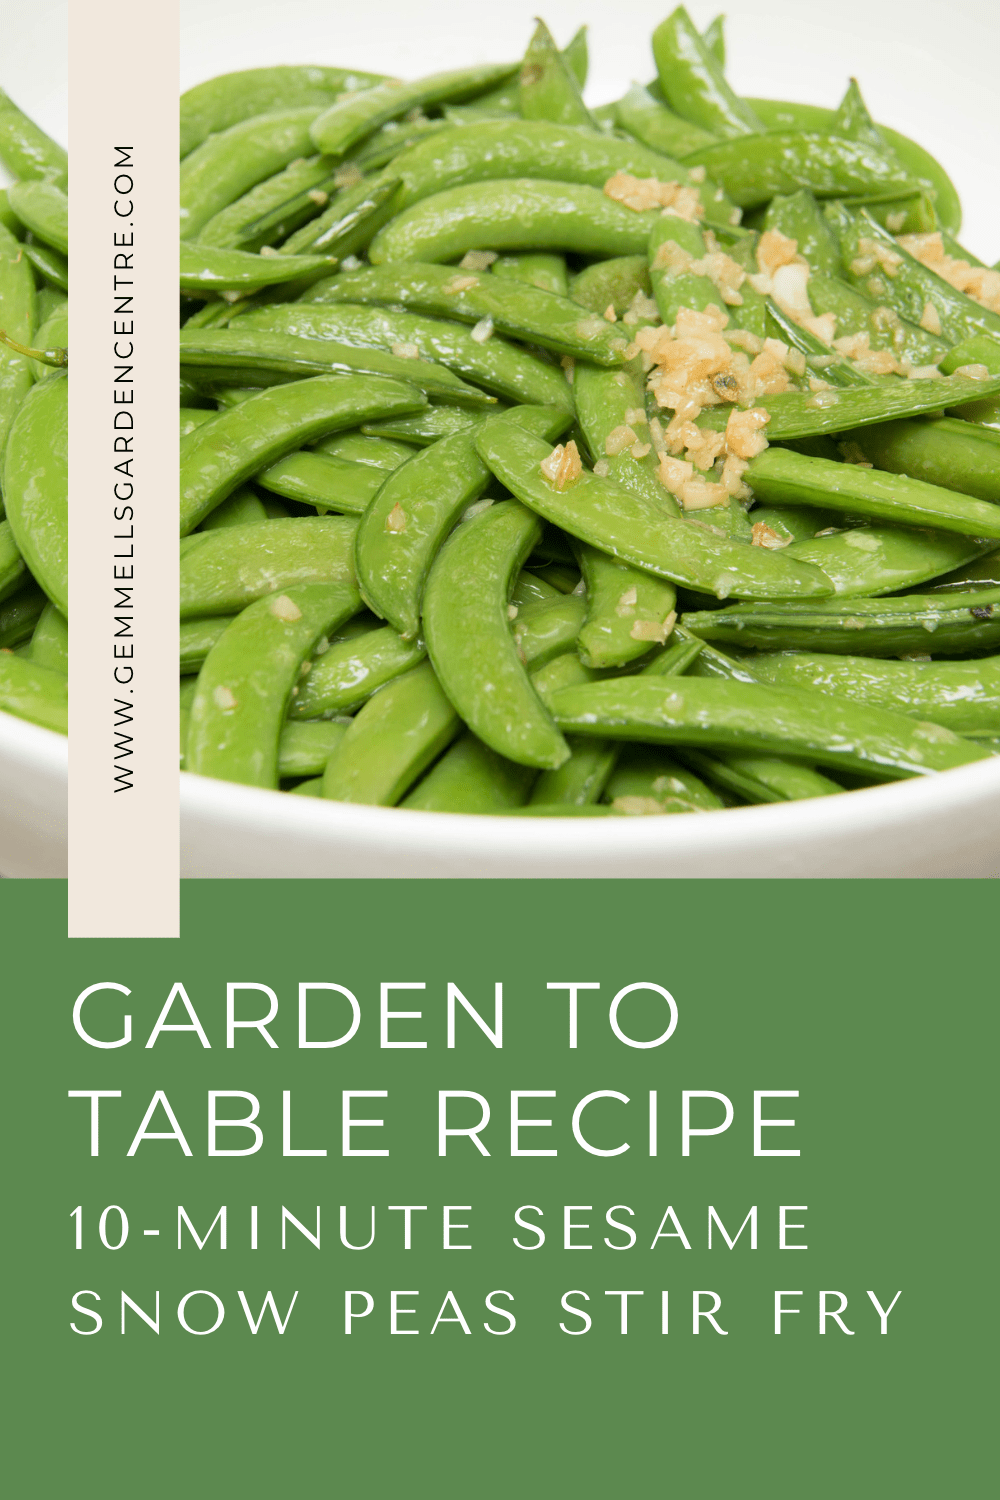 10-Minute Sesame Snow Peas Stir Fry Recipe | Garden to Table Recipe